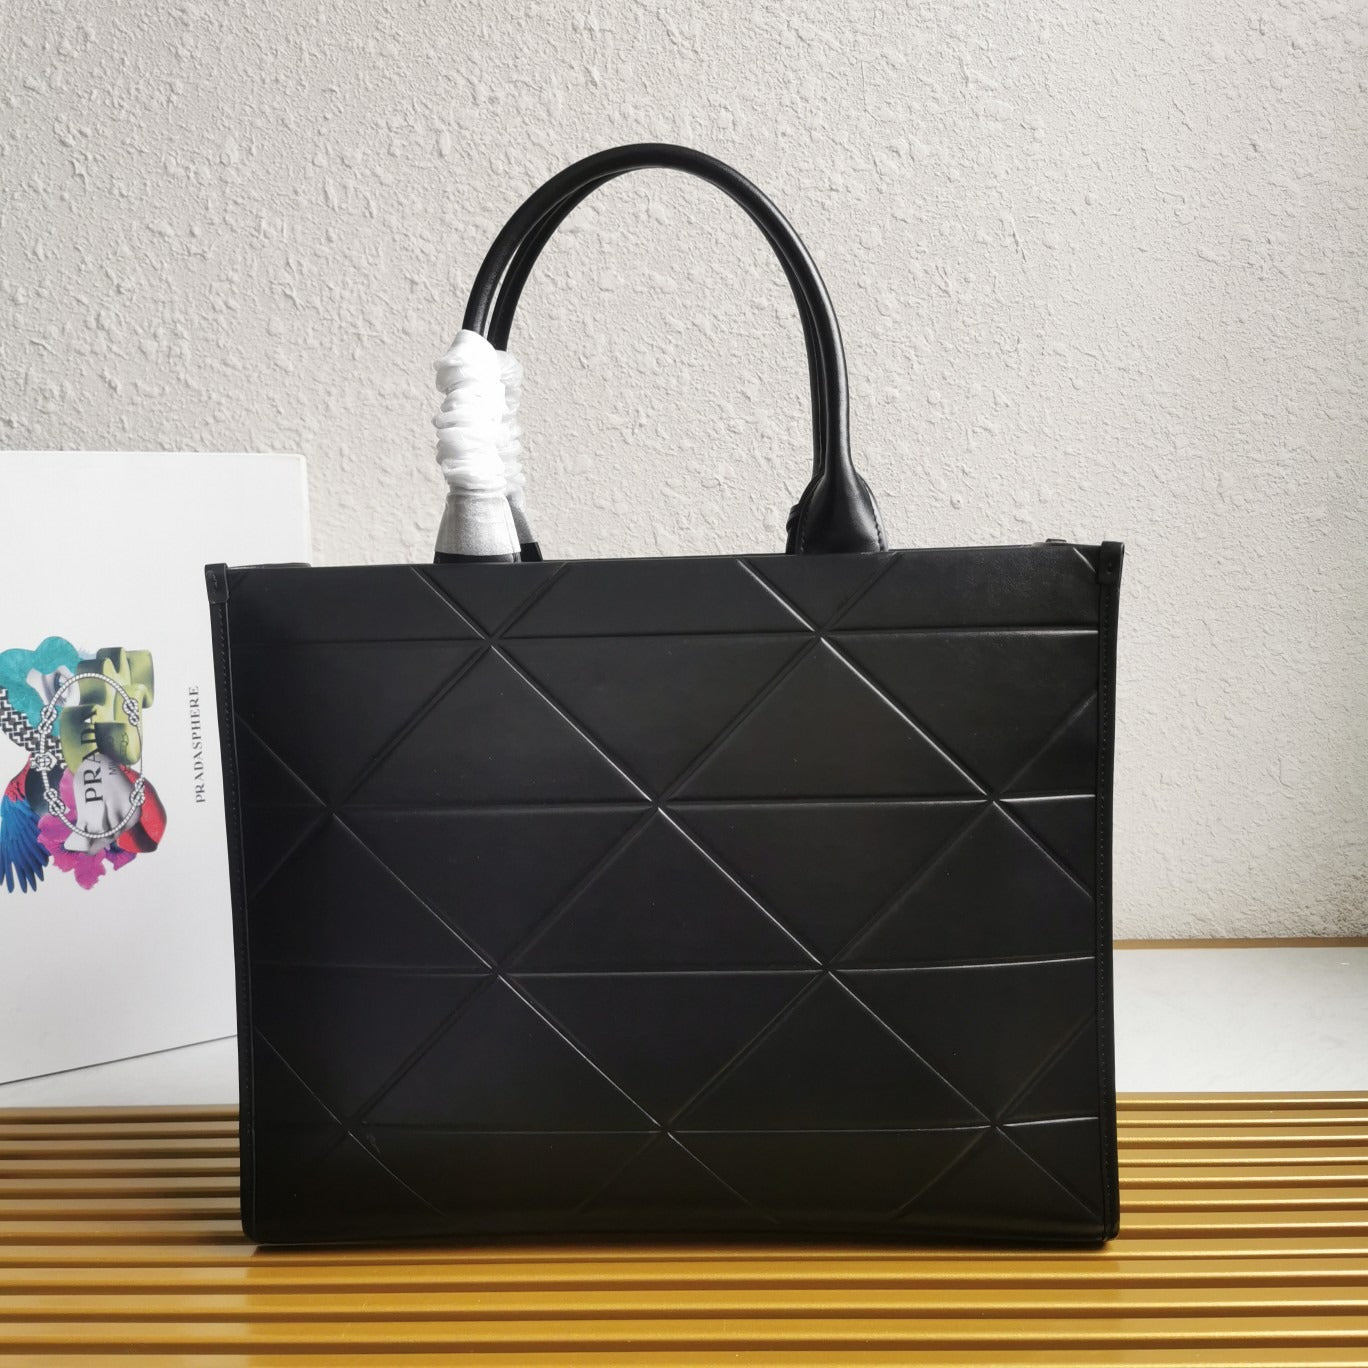 Large Leather PRD Symbole Bag With Topstitching Black 